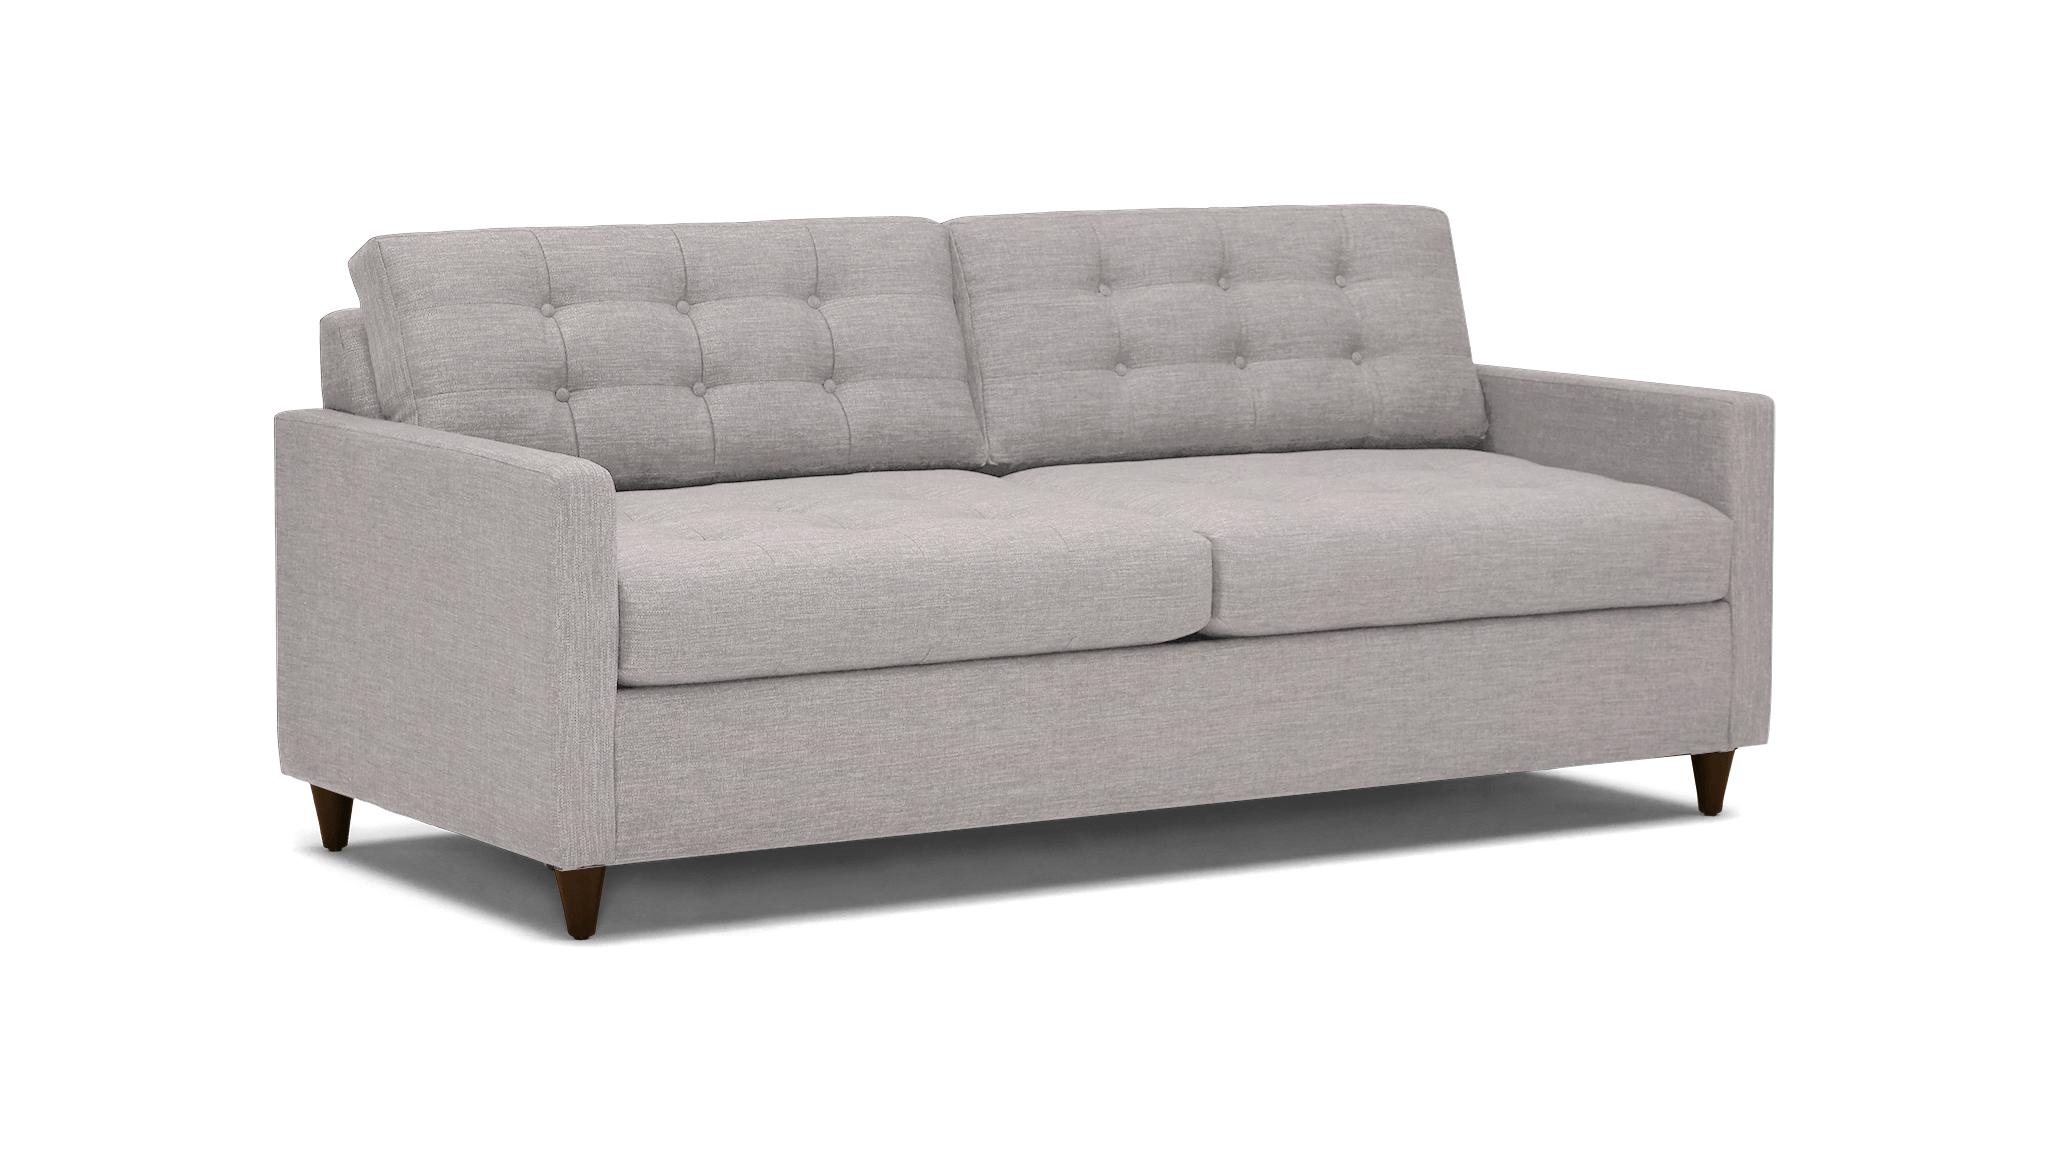 Eliot Mid Century Modern Sleeper Sofa - Sunbrella Premier Wisteria - Mocha - Foam - Image 1